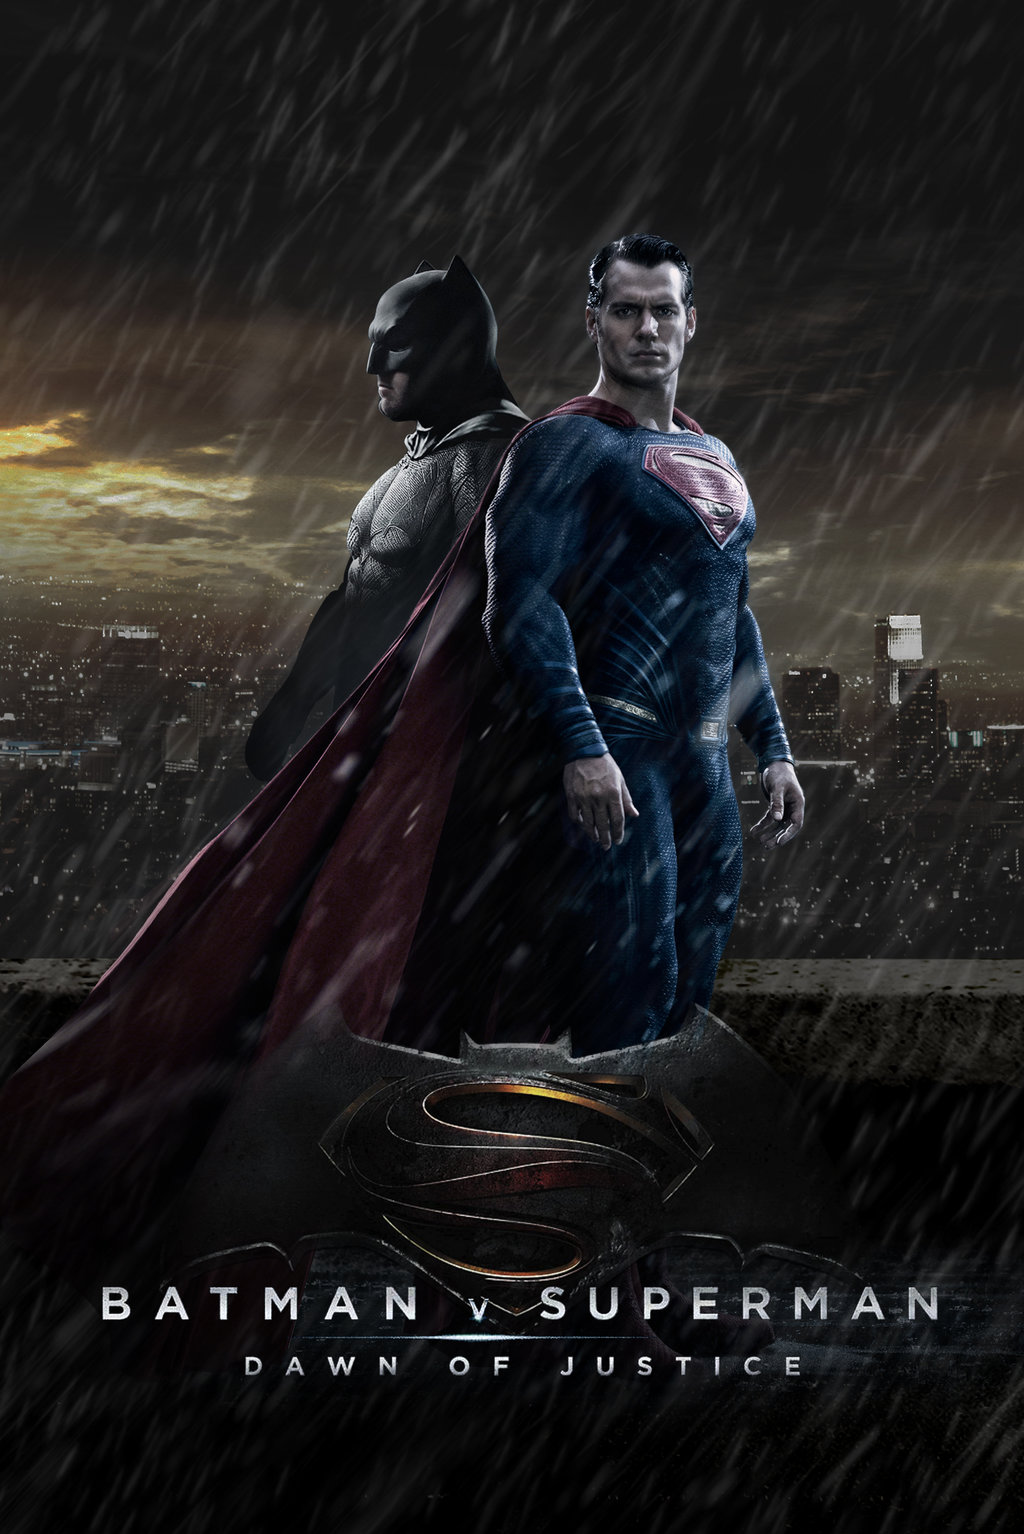 Batman vs Superman HQ Wallpapers Full HD Pictures